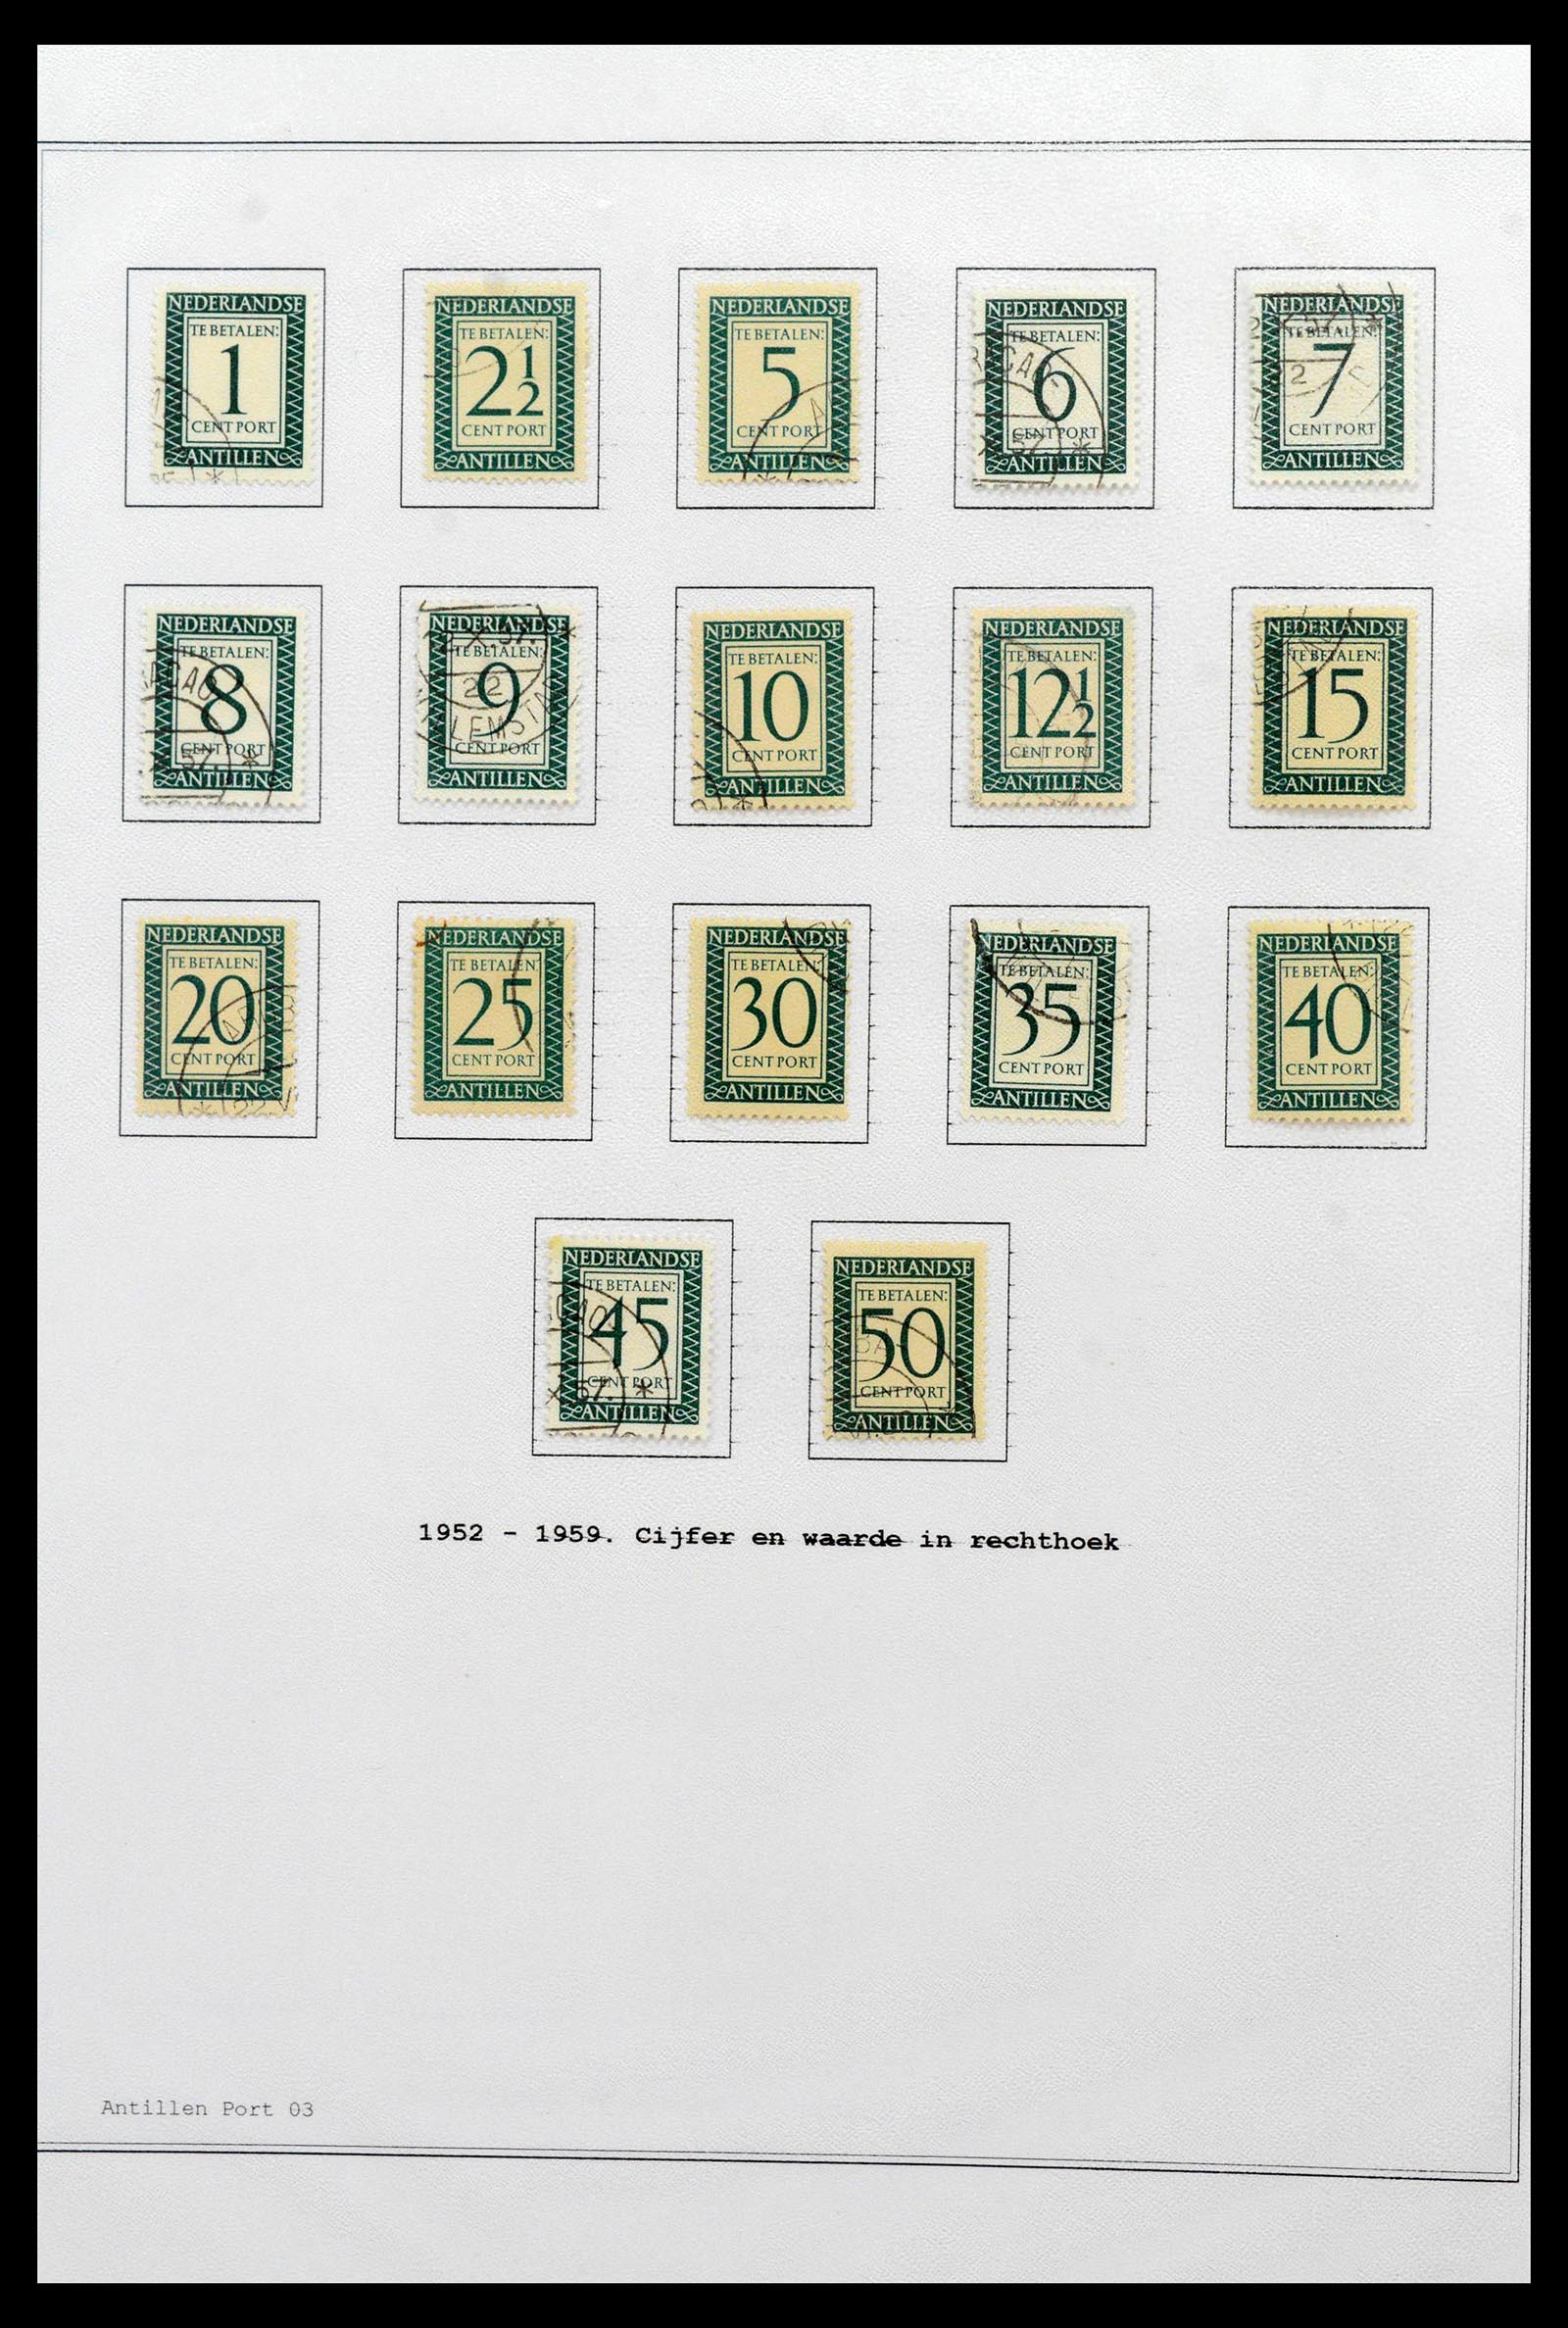 39024 0205 - Stamp collection 39024 Curaçao/Antilles 1873-2006.